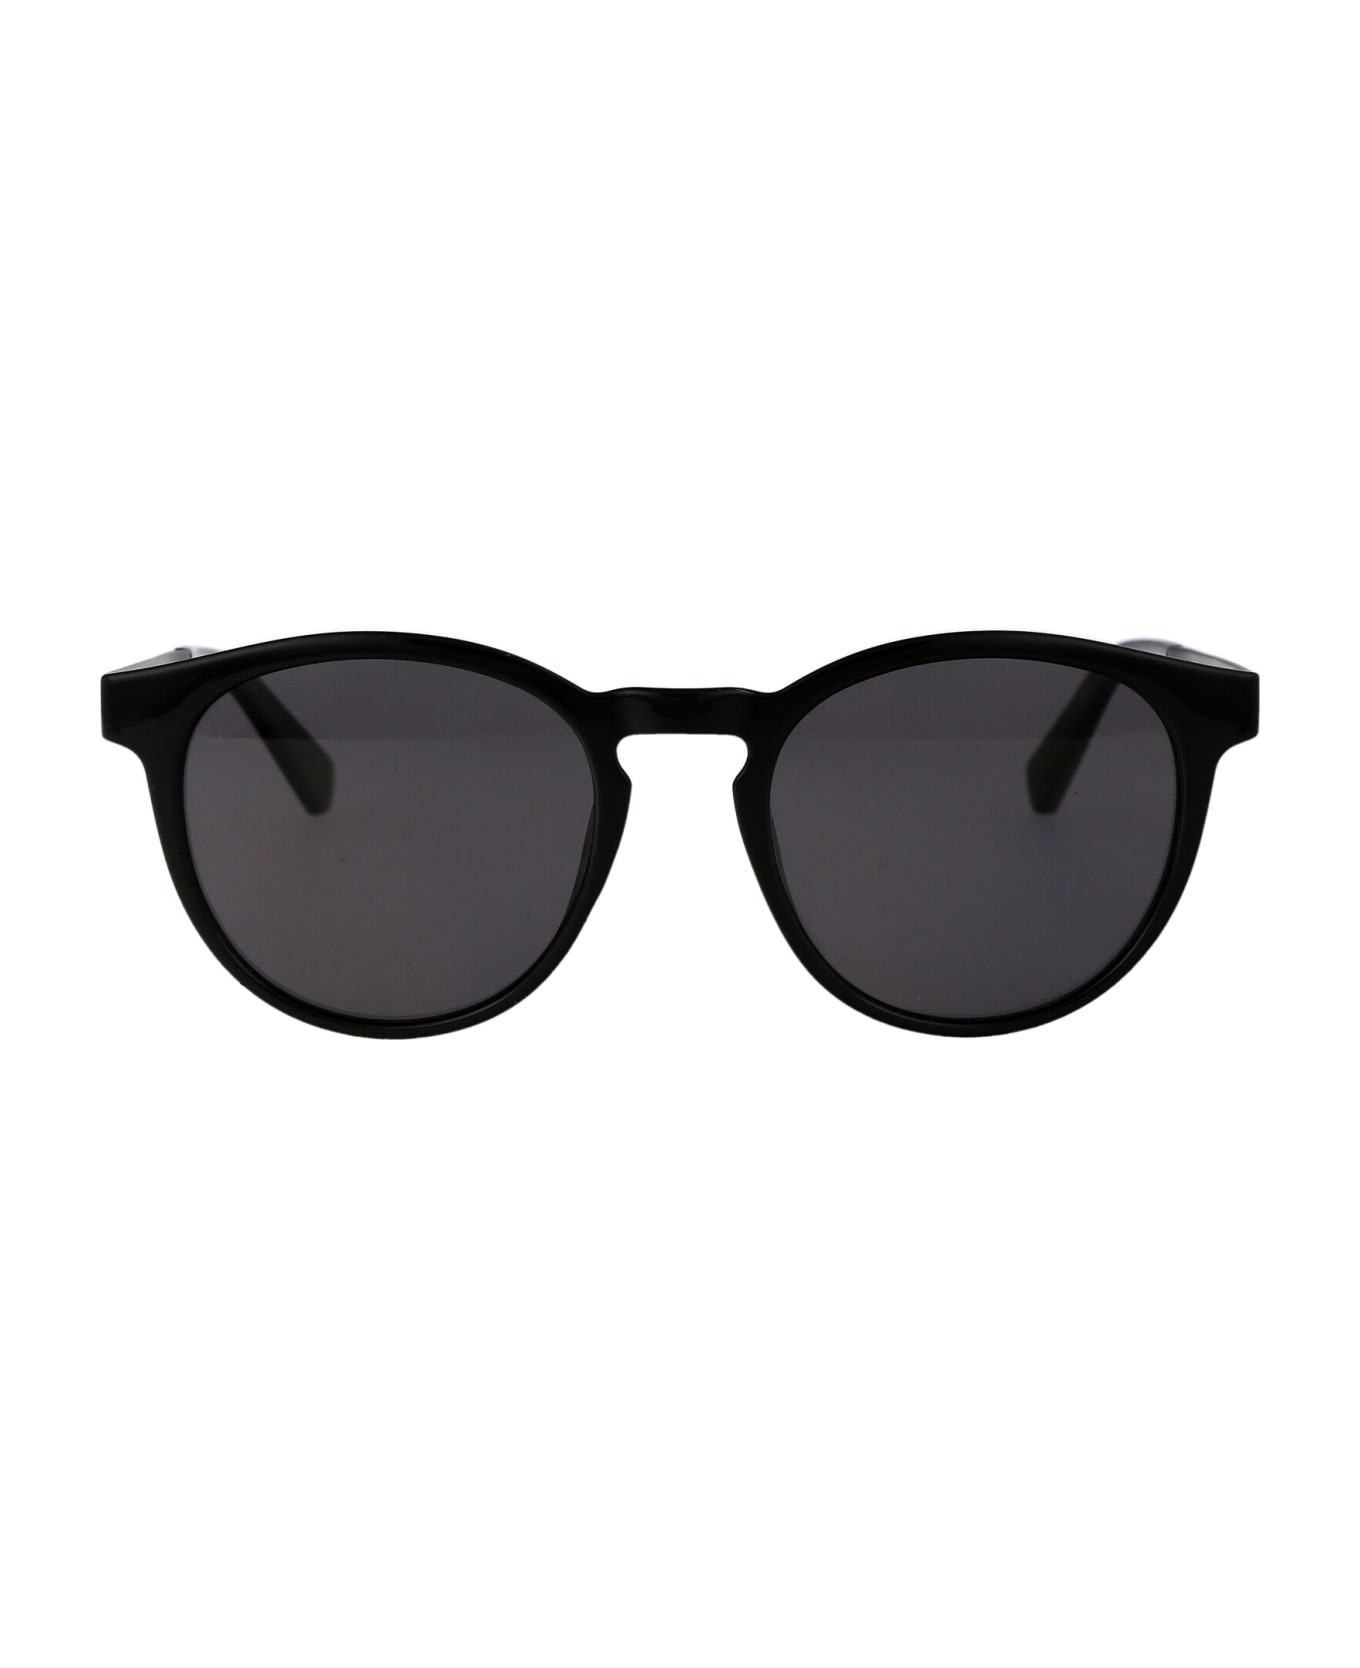 Calvin Klein Jeans Ckj22643s Sunglasses - 001 BLACK